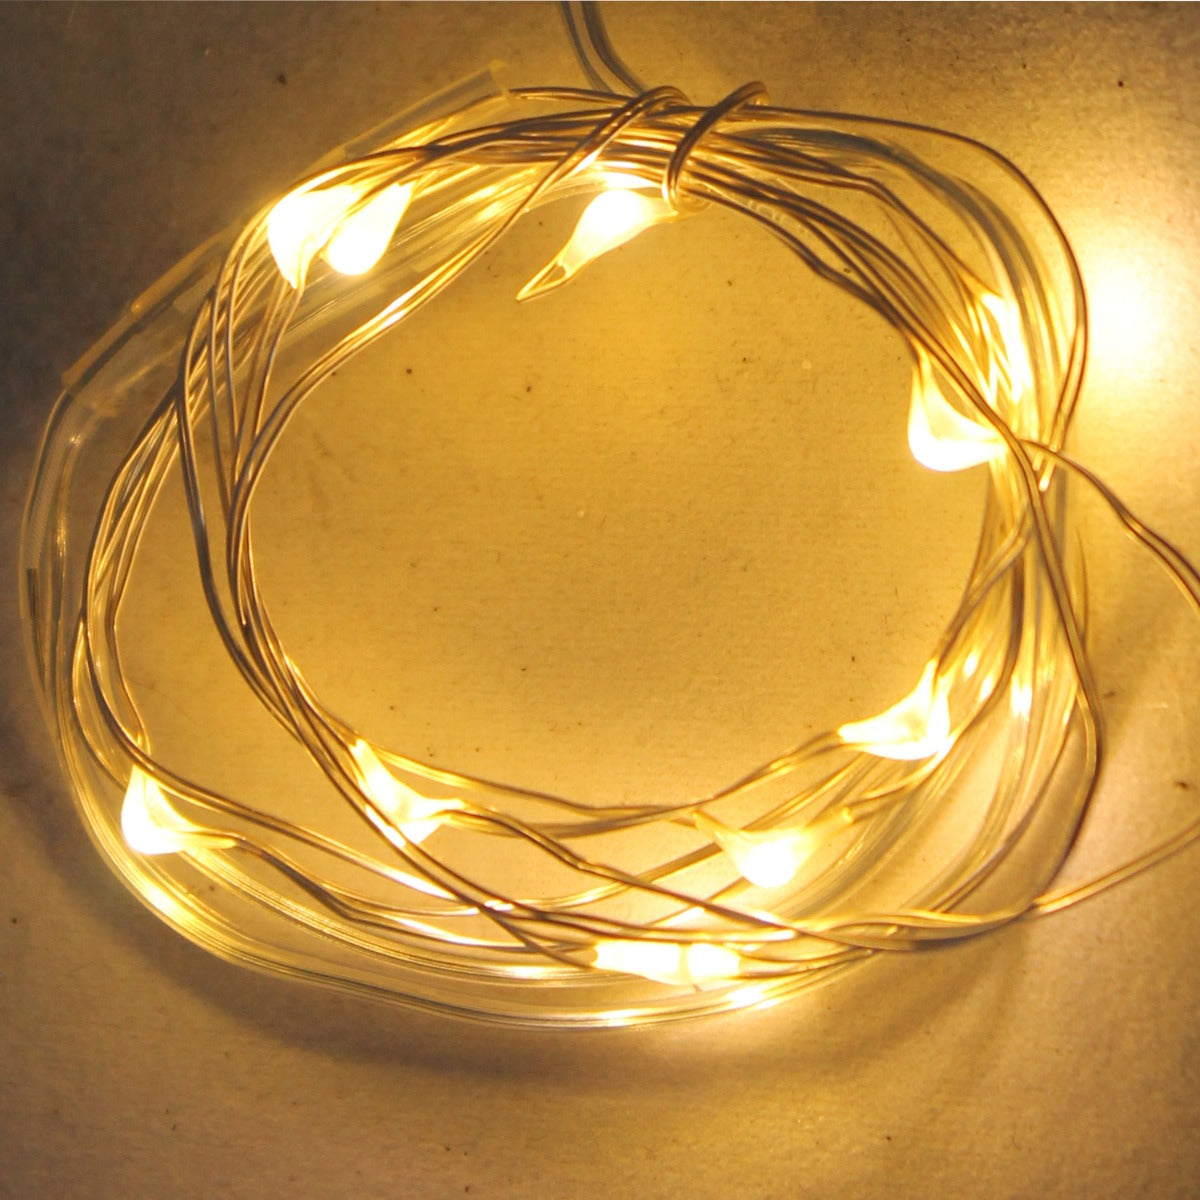 LED Lichterkette MICRO 4er Set à 10 Leuchten warmweiß Weichtnachtsbeleuchtung Batteriebetrieb für Innen inkl. Batterien